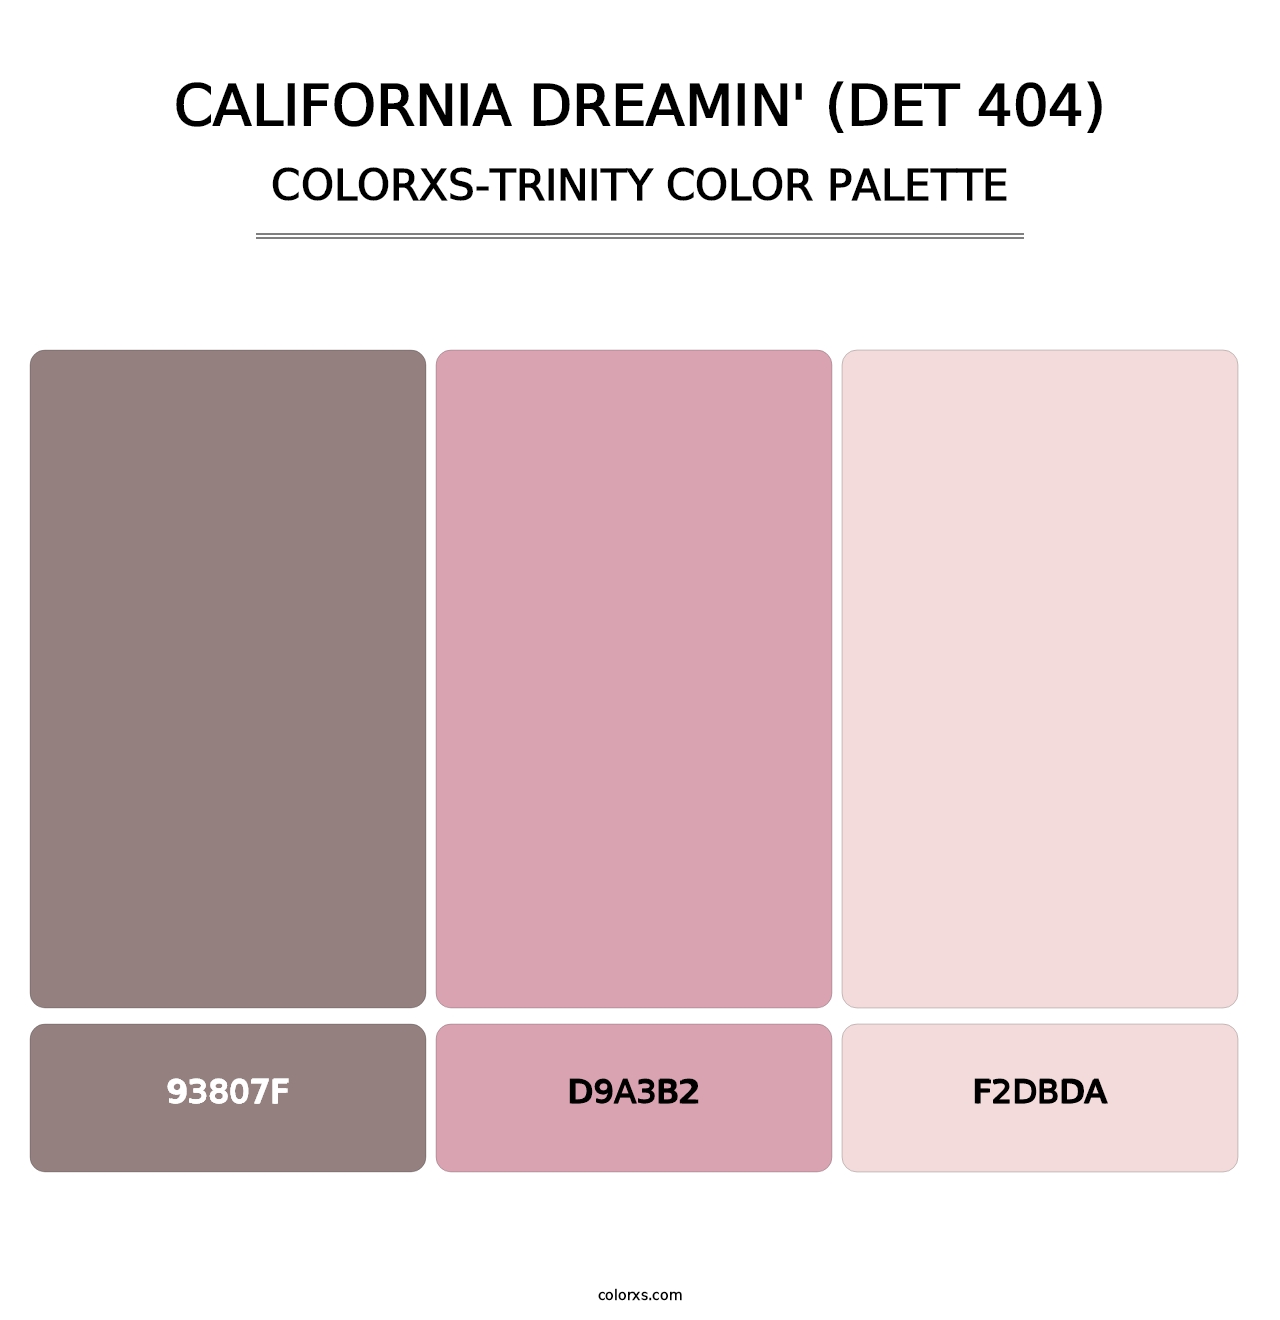 California Dreamin' (DET 404) - Colorxs Trinity Palette